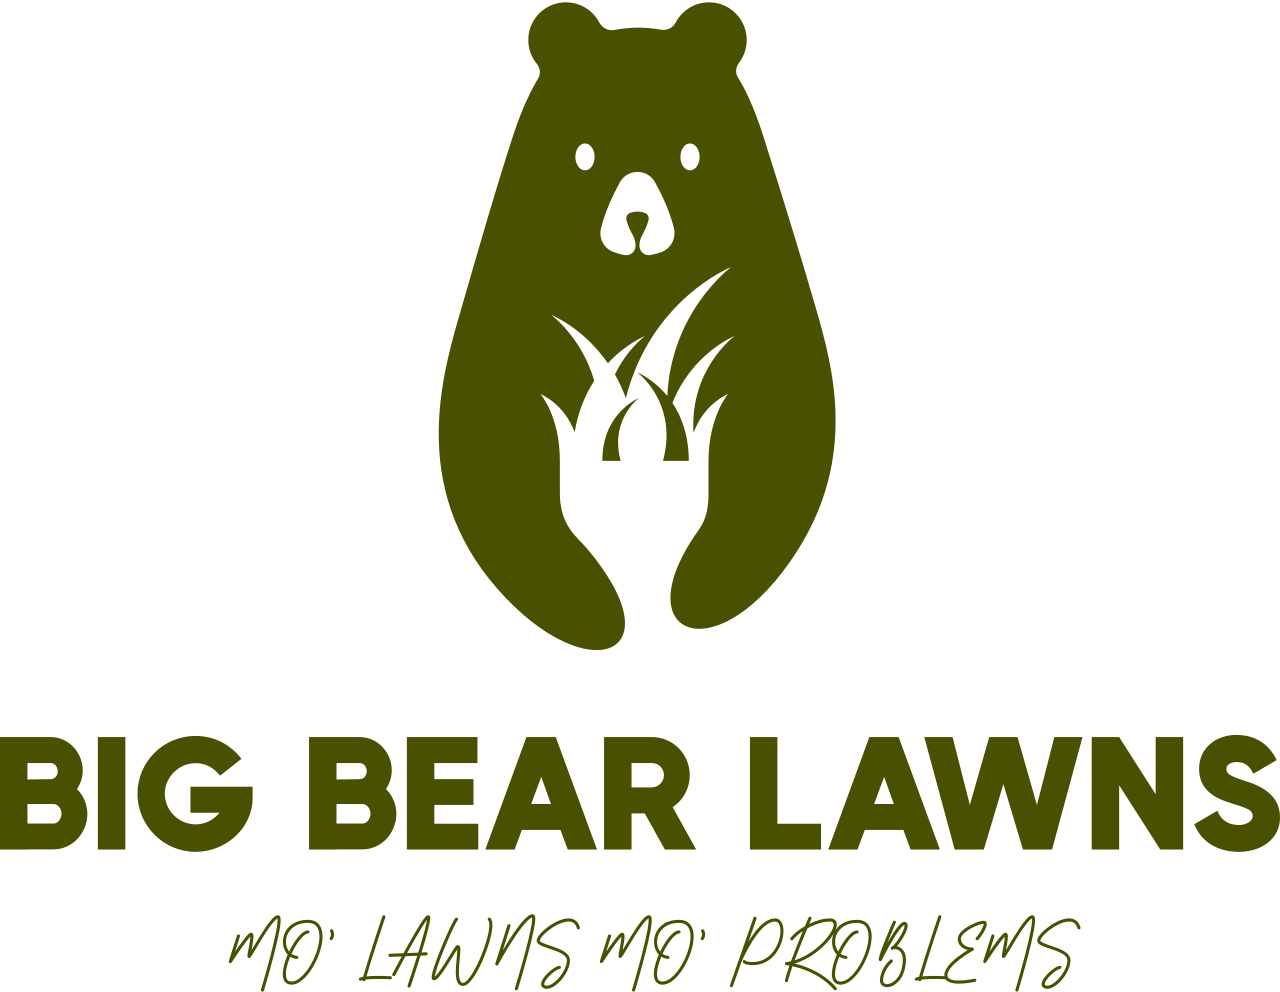 Big bear lawns's logo